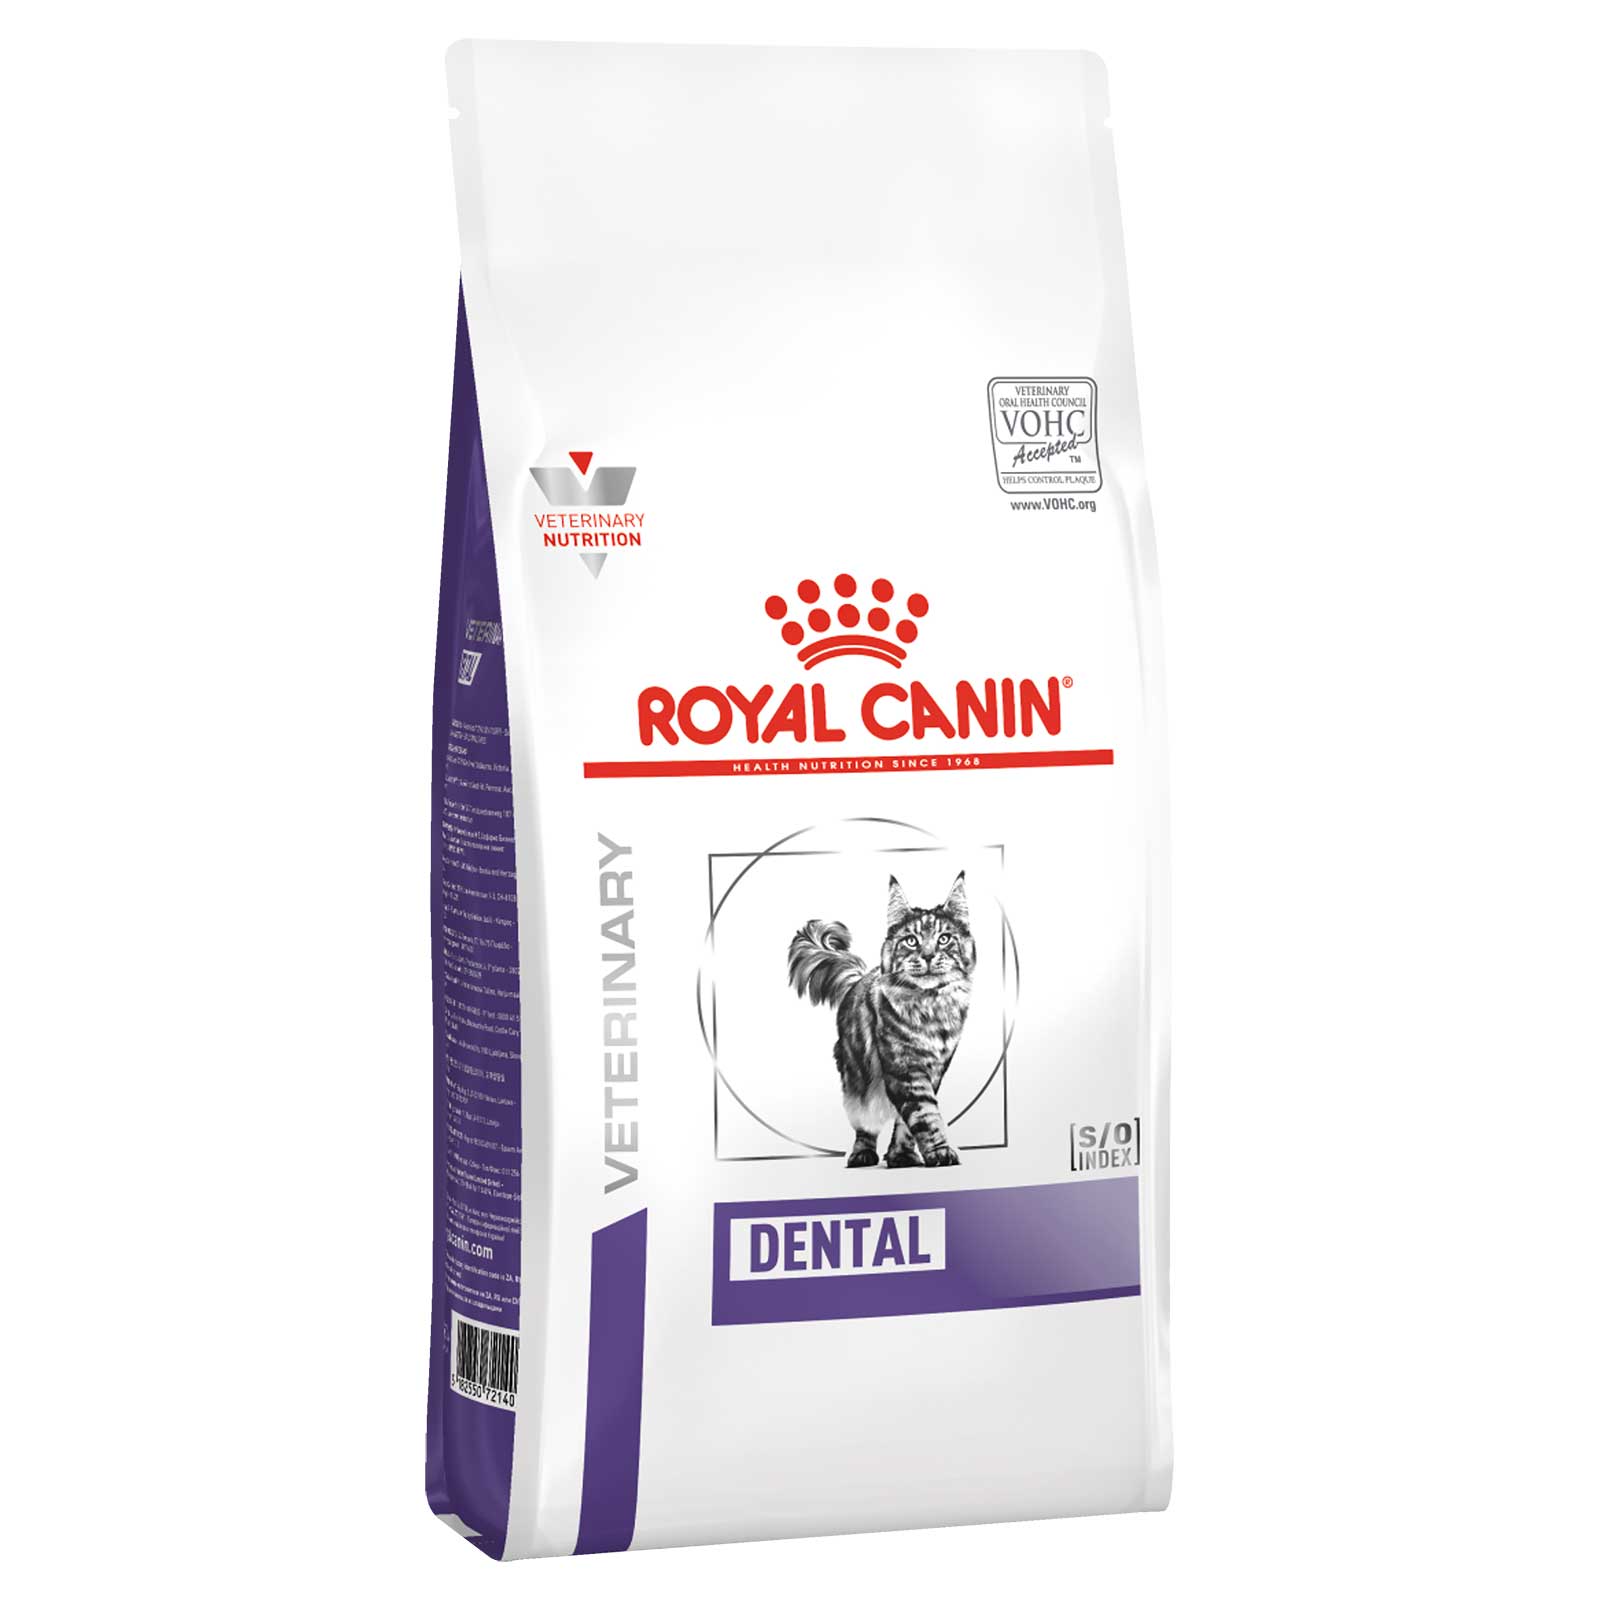 Royal Canin Veterinary Cat Food Dental